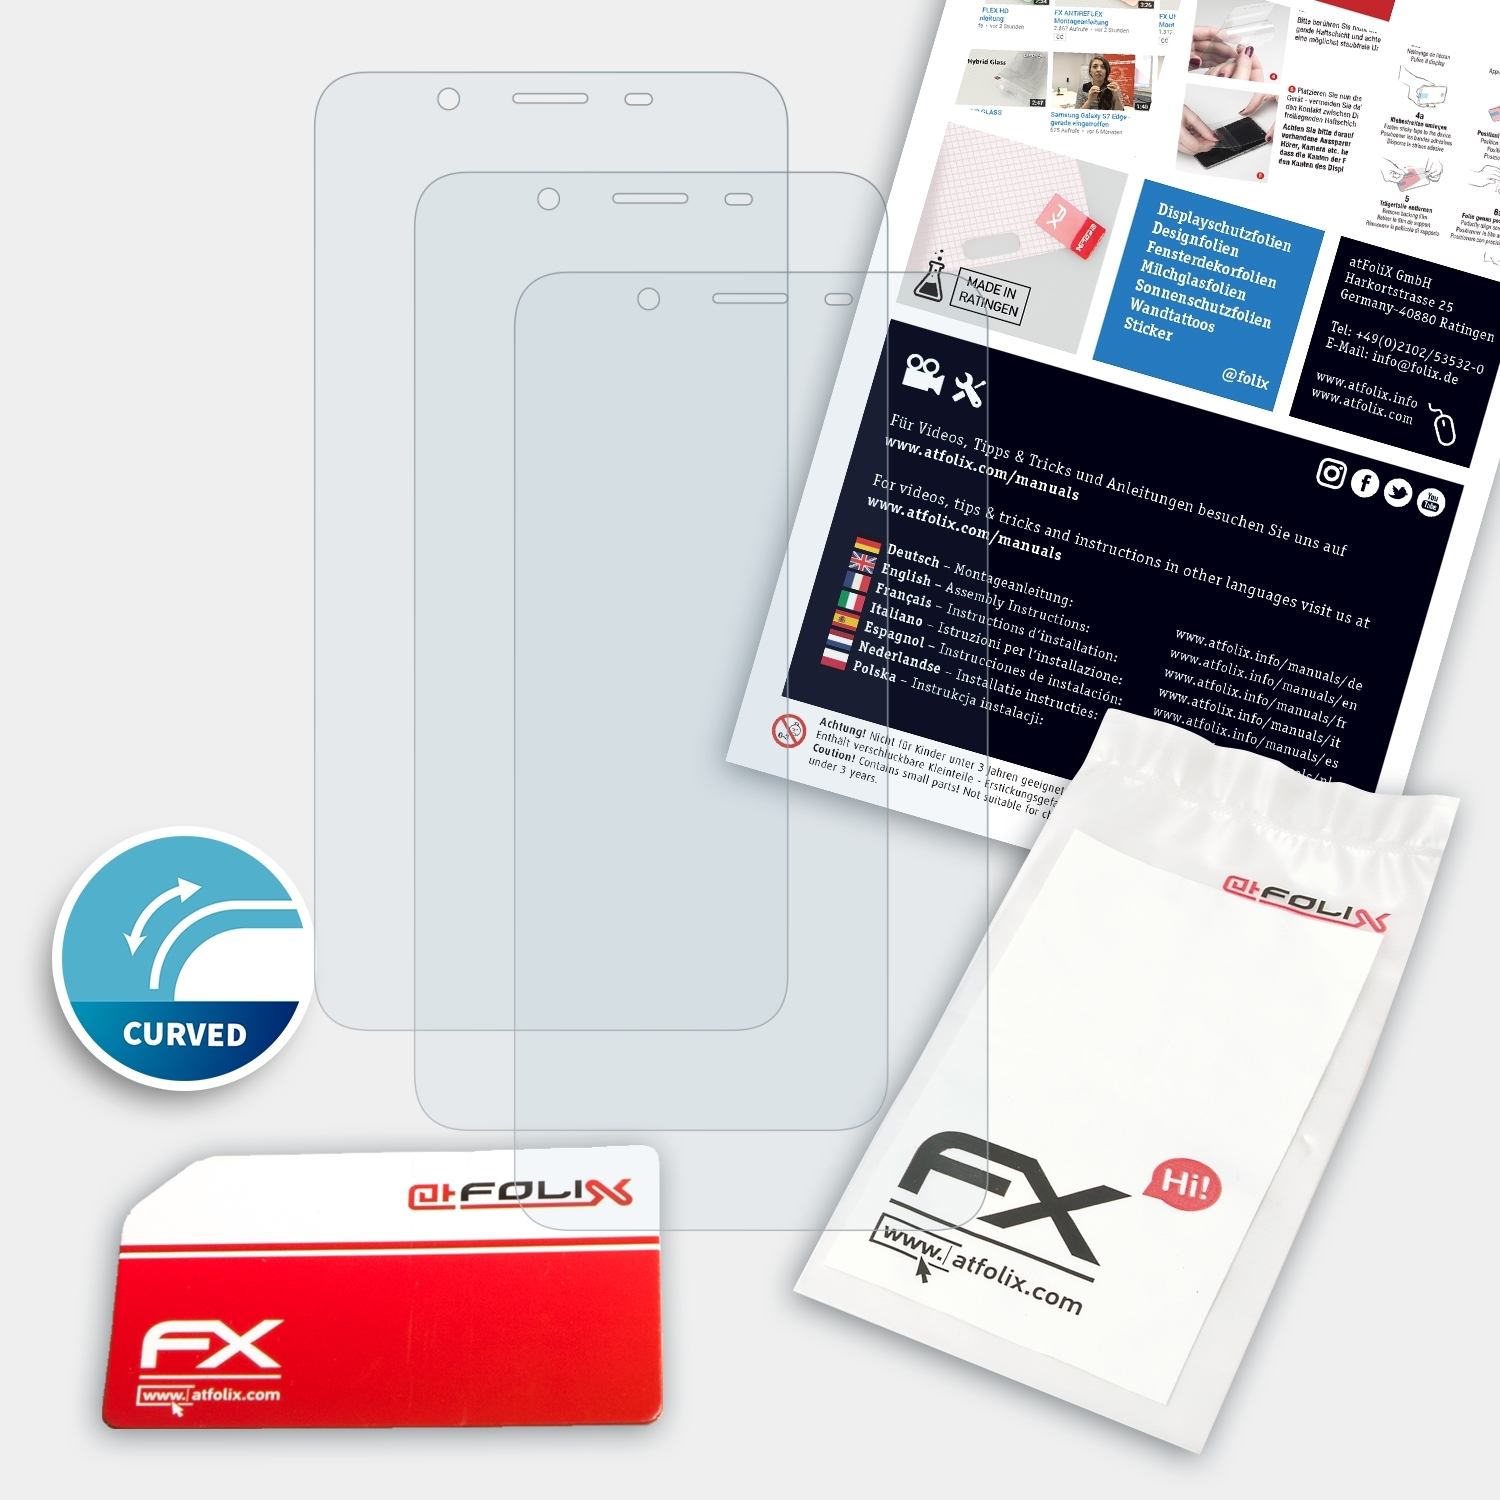 ATFOLIX 3x FX-ActiFleX P2 Lite) Displayschutz(für Blackview